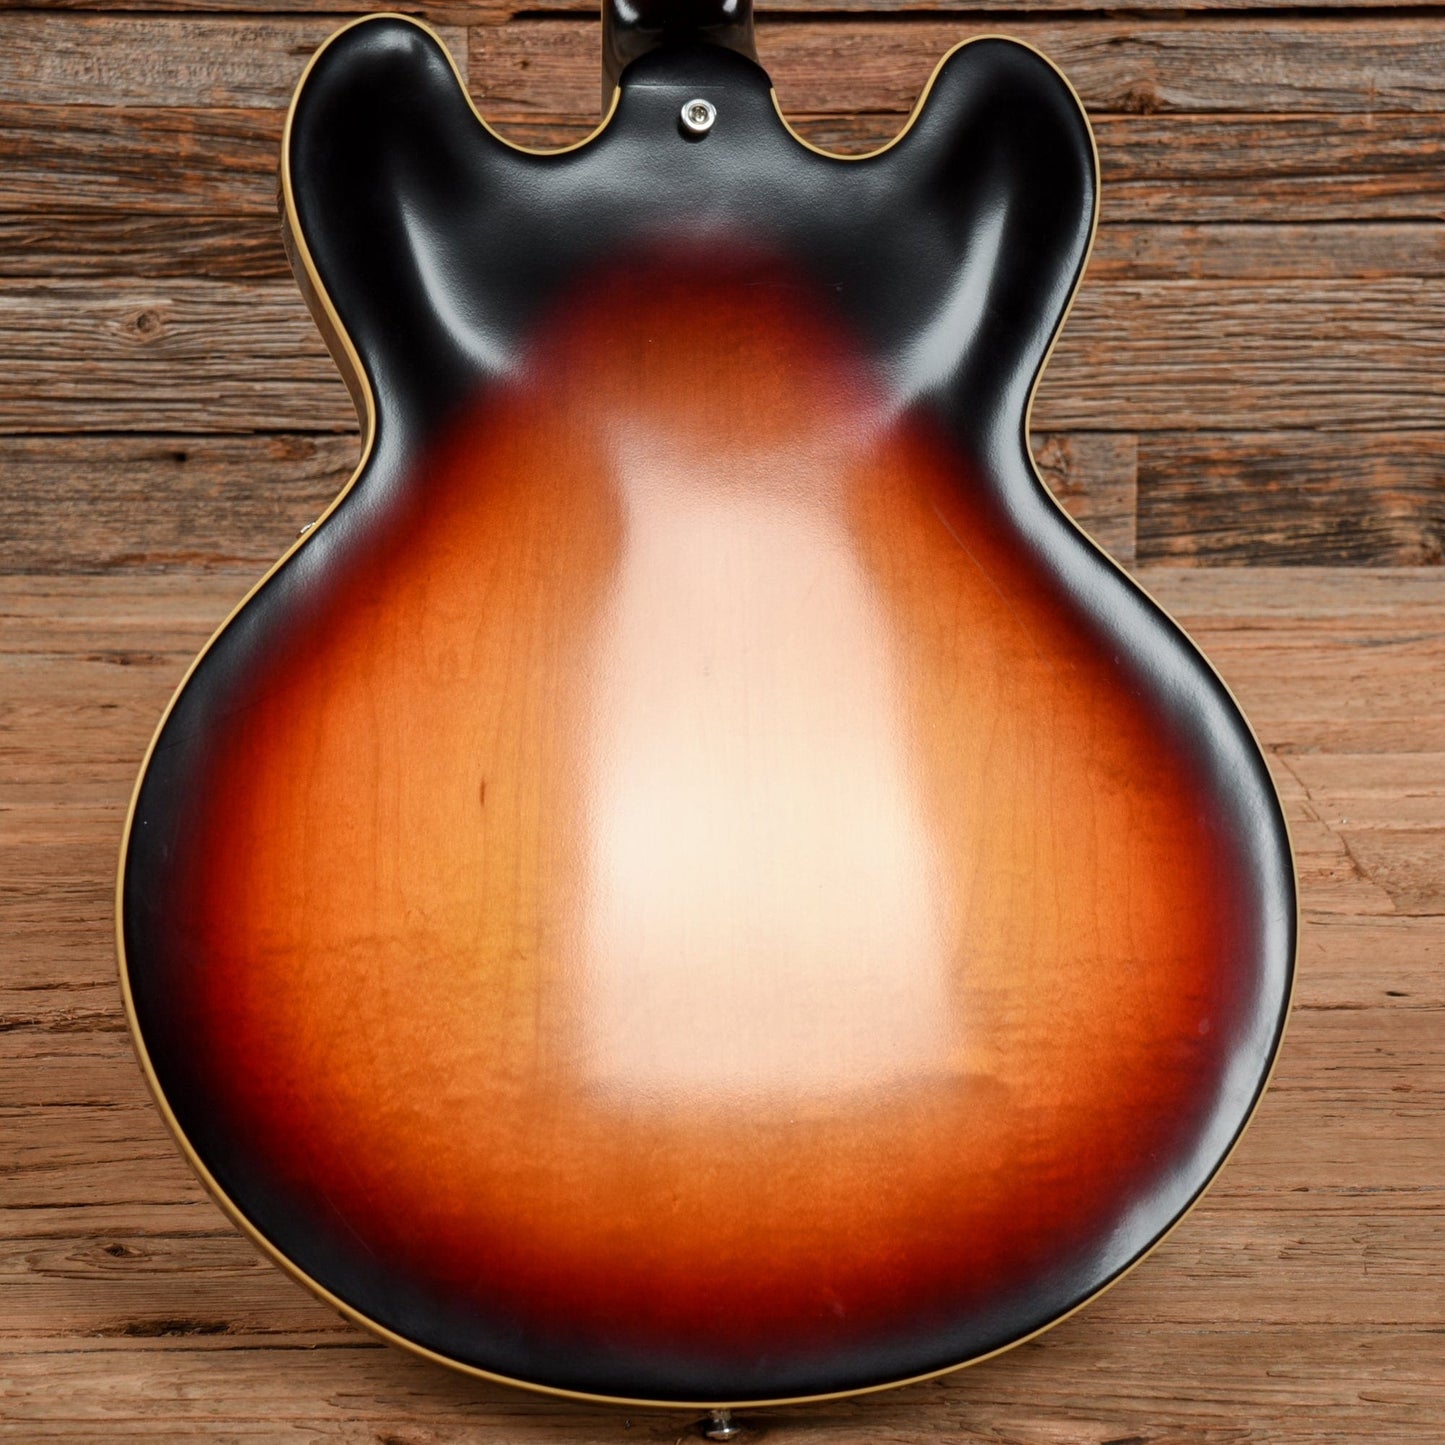 Gibson ES-335 Dot Satin Sunburst 2019 Electric Guitars / Semi-Hollow